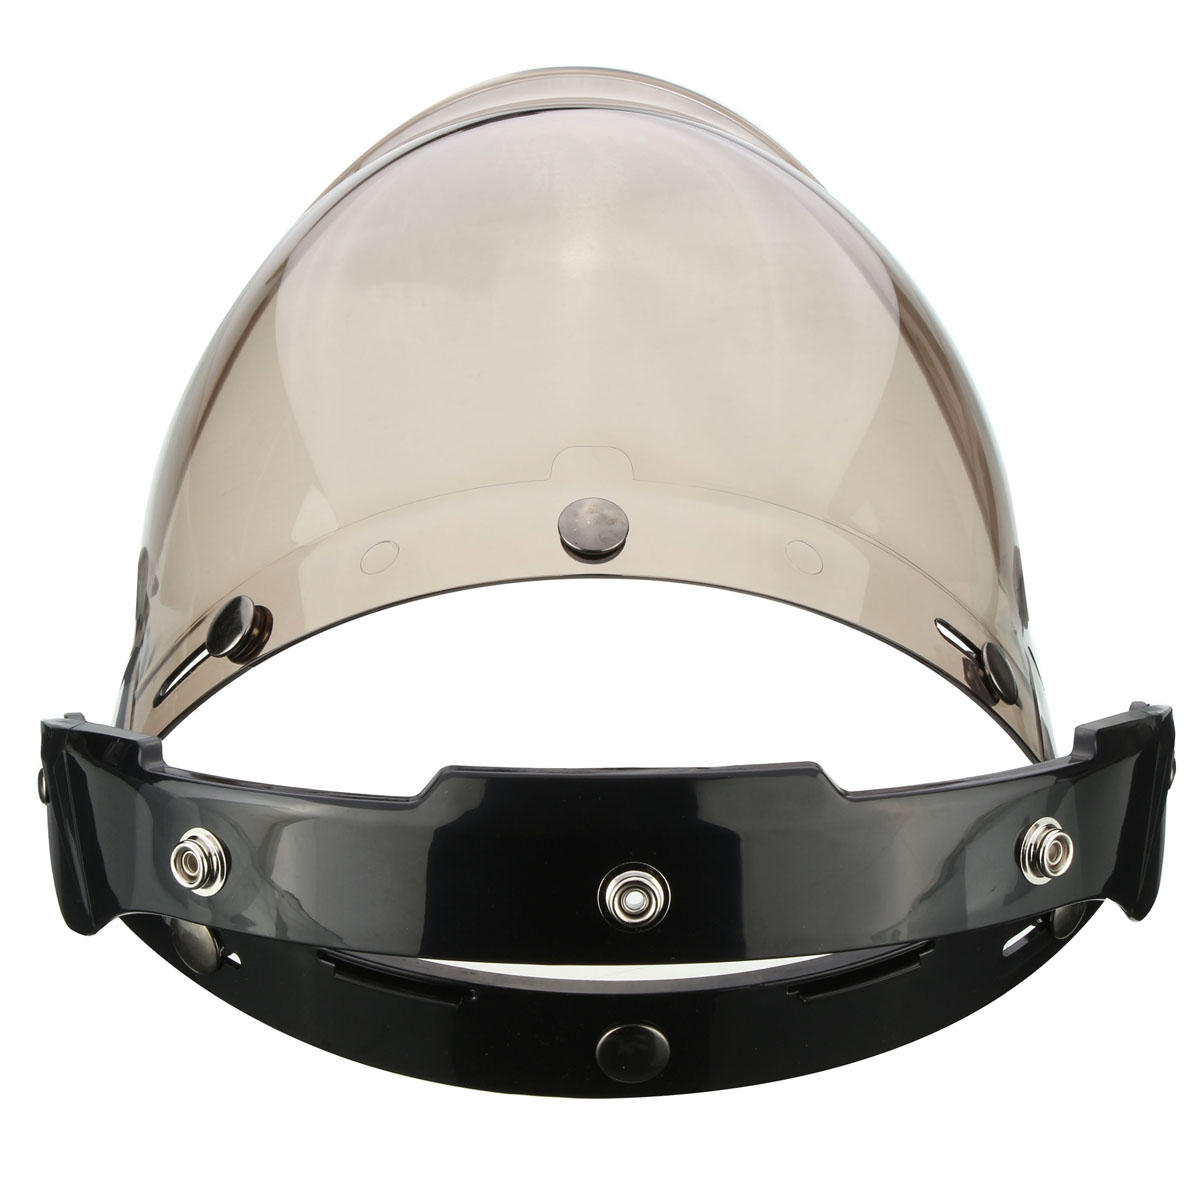 3-Snap Button Bubble Visor Flip Up Wind Face Shield Lens for Motorcycle Helmet 3 Color